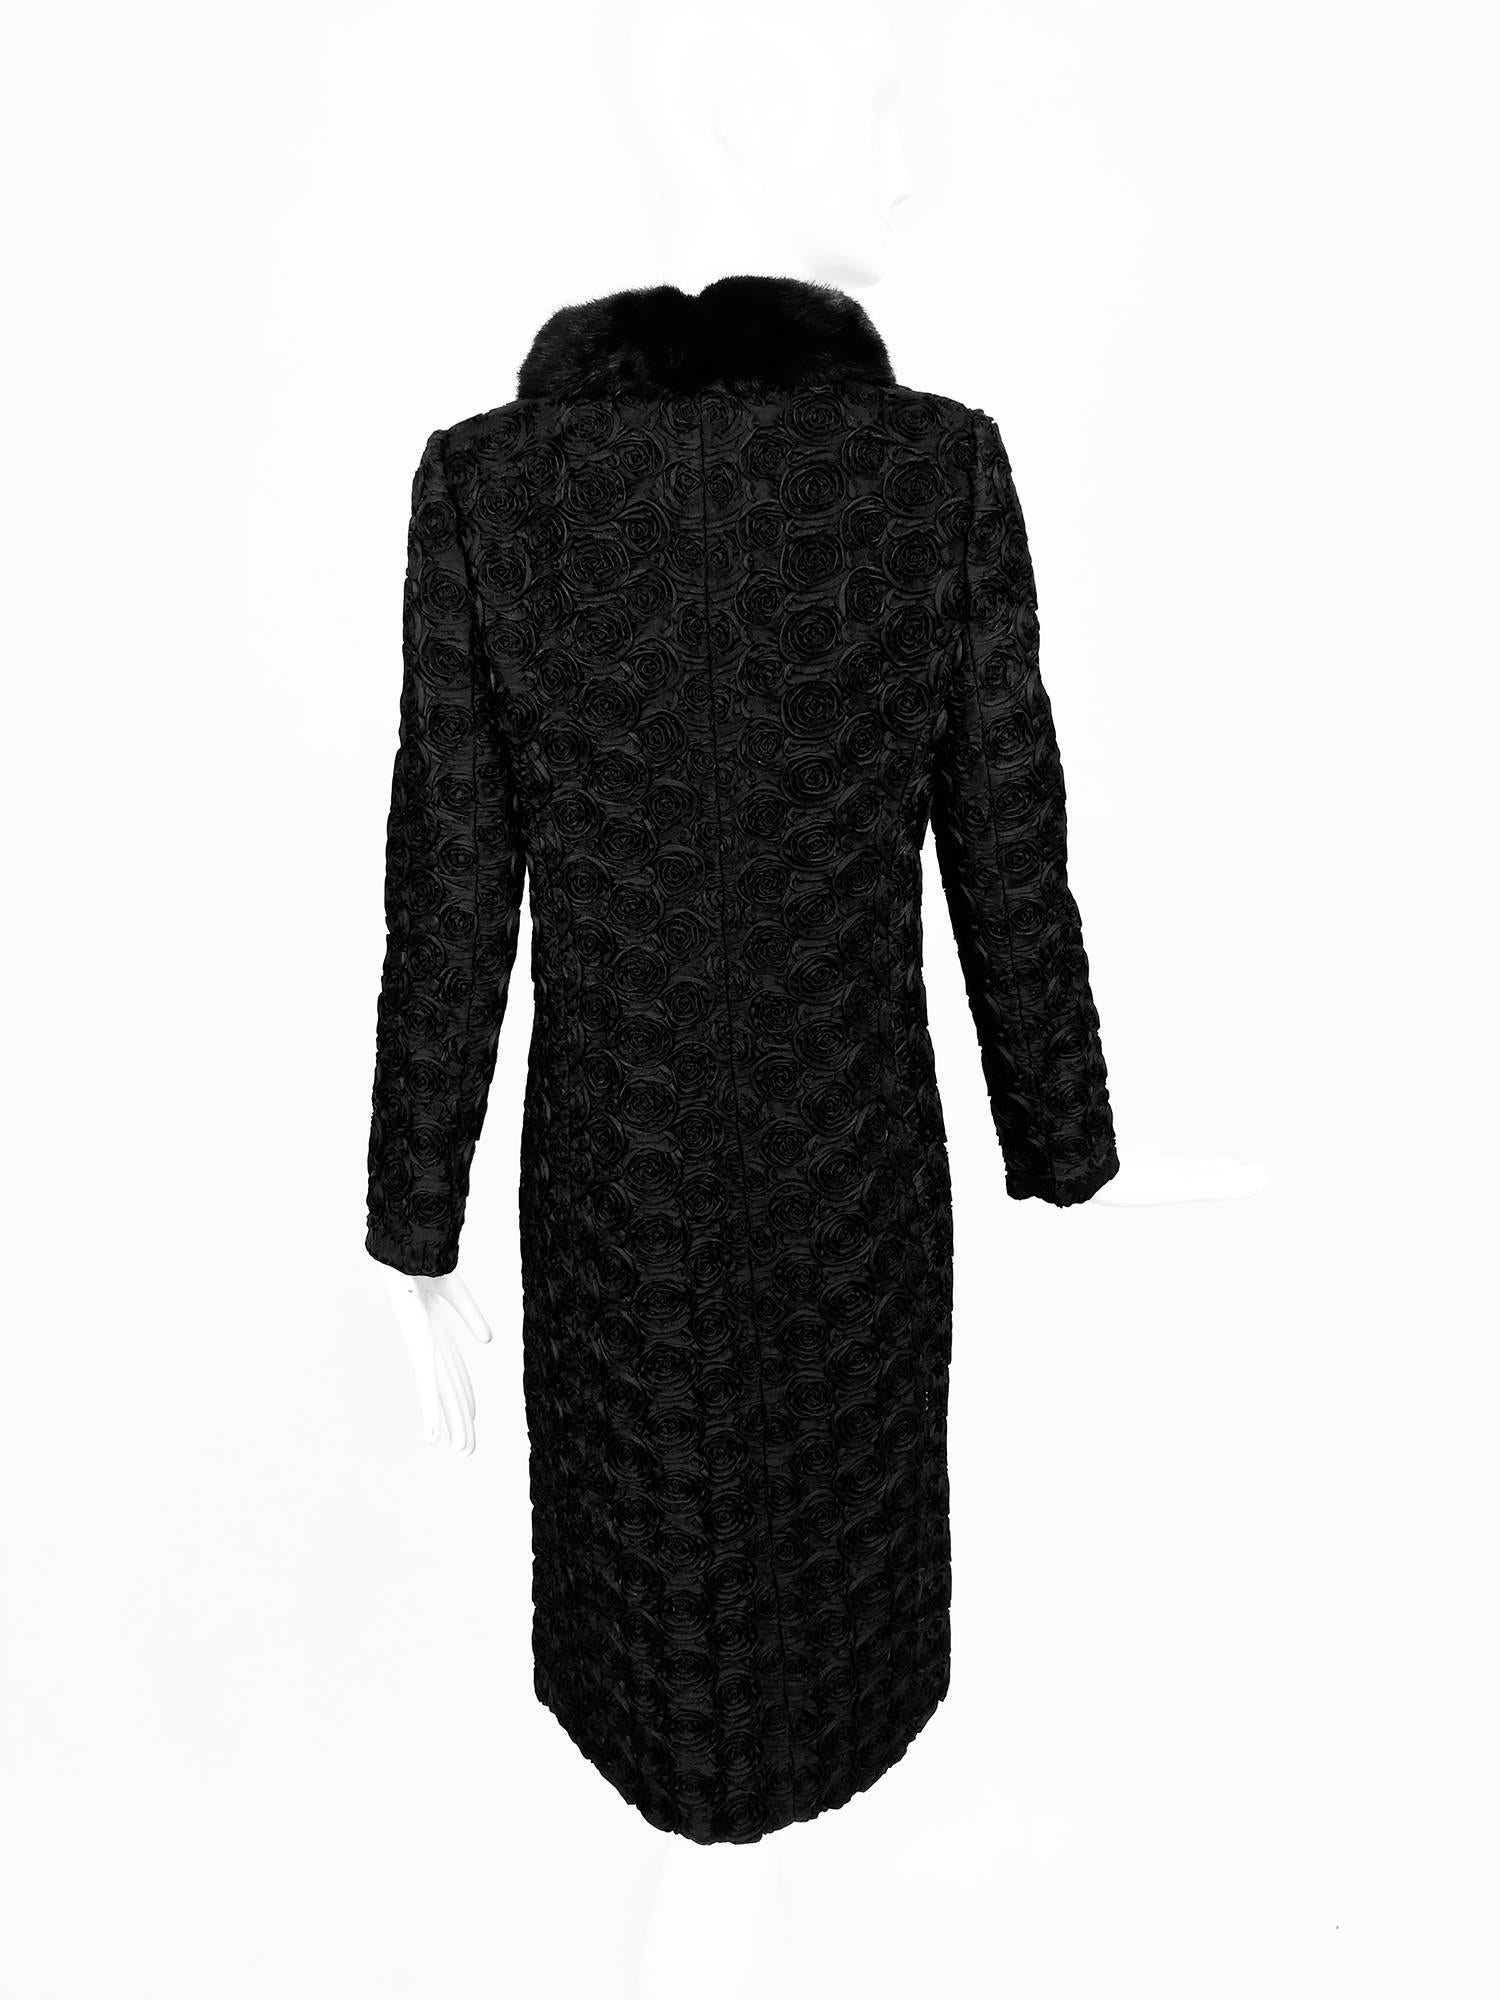 Valentino Black Silk Faille Appliqued Coat Mink Collar  For Sale 3